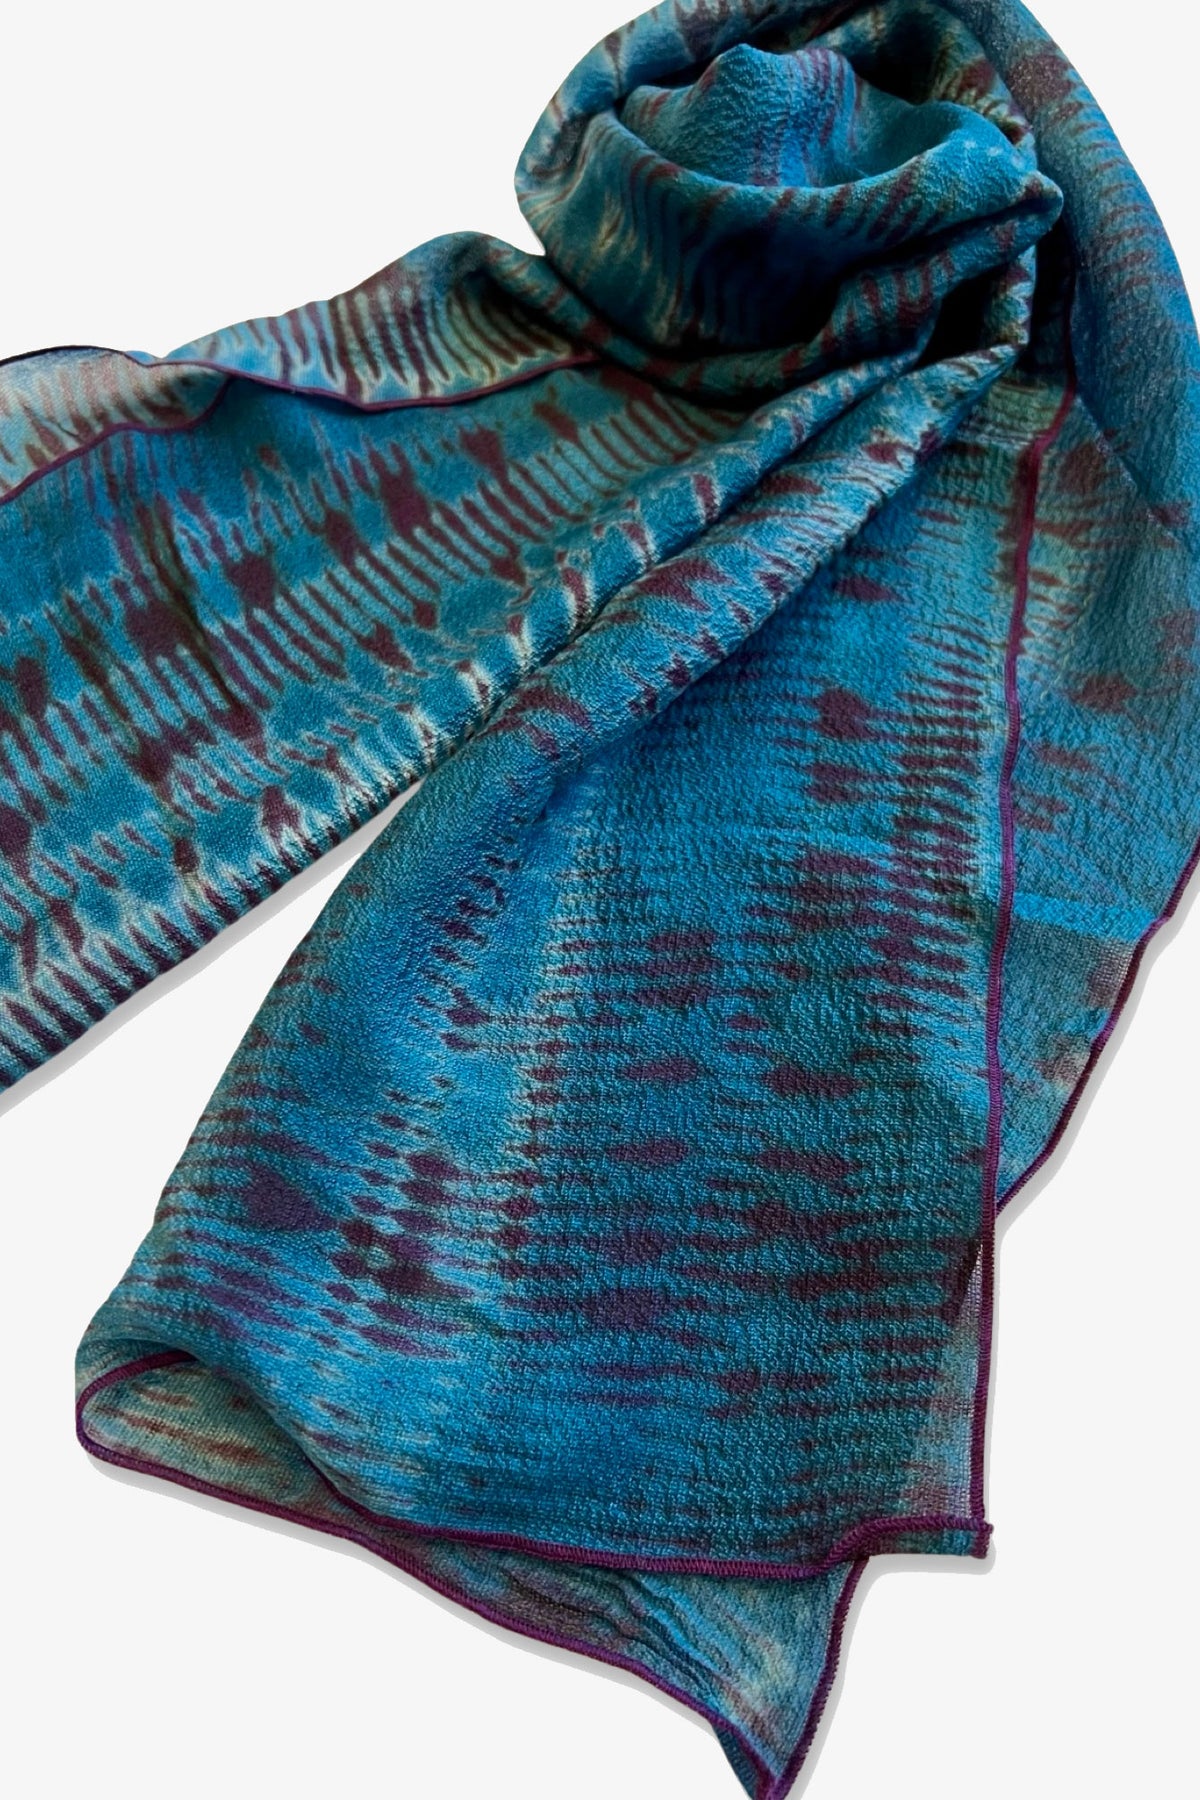 Shibori Dyed Silk Scarf | Deep Arctic Blue